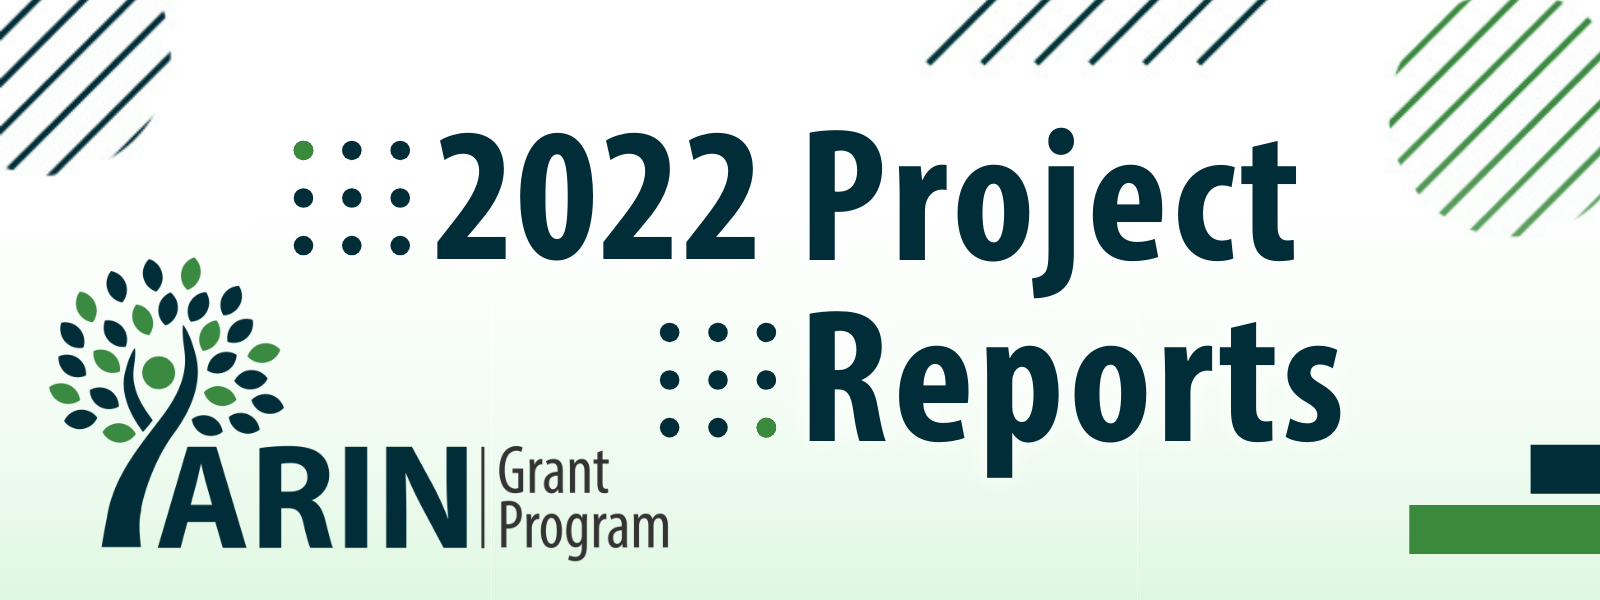 ARIN Community Grant Program 2022 Project Reports